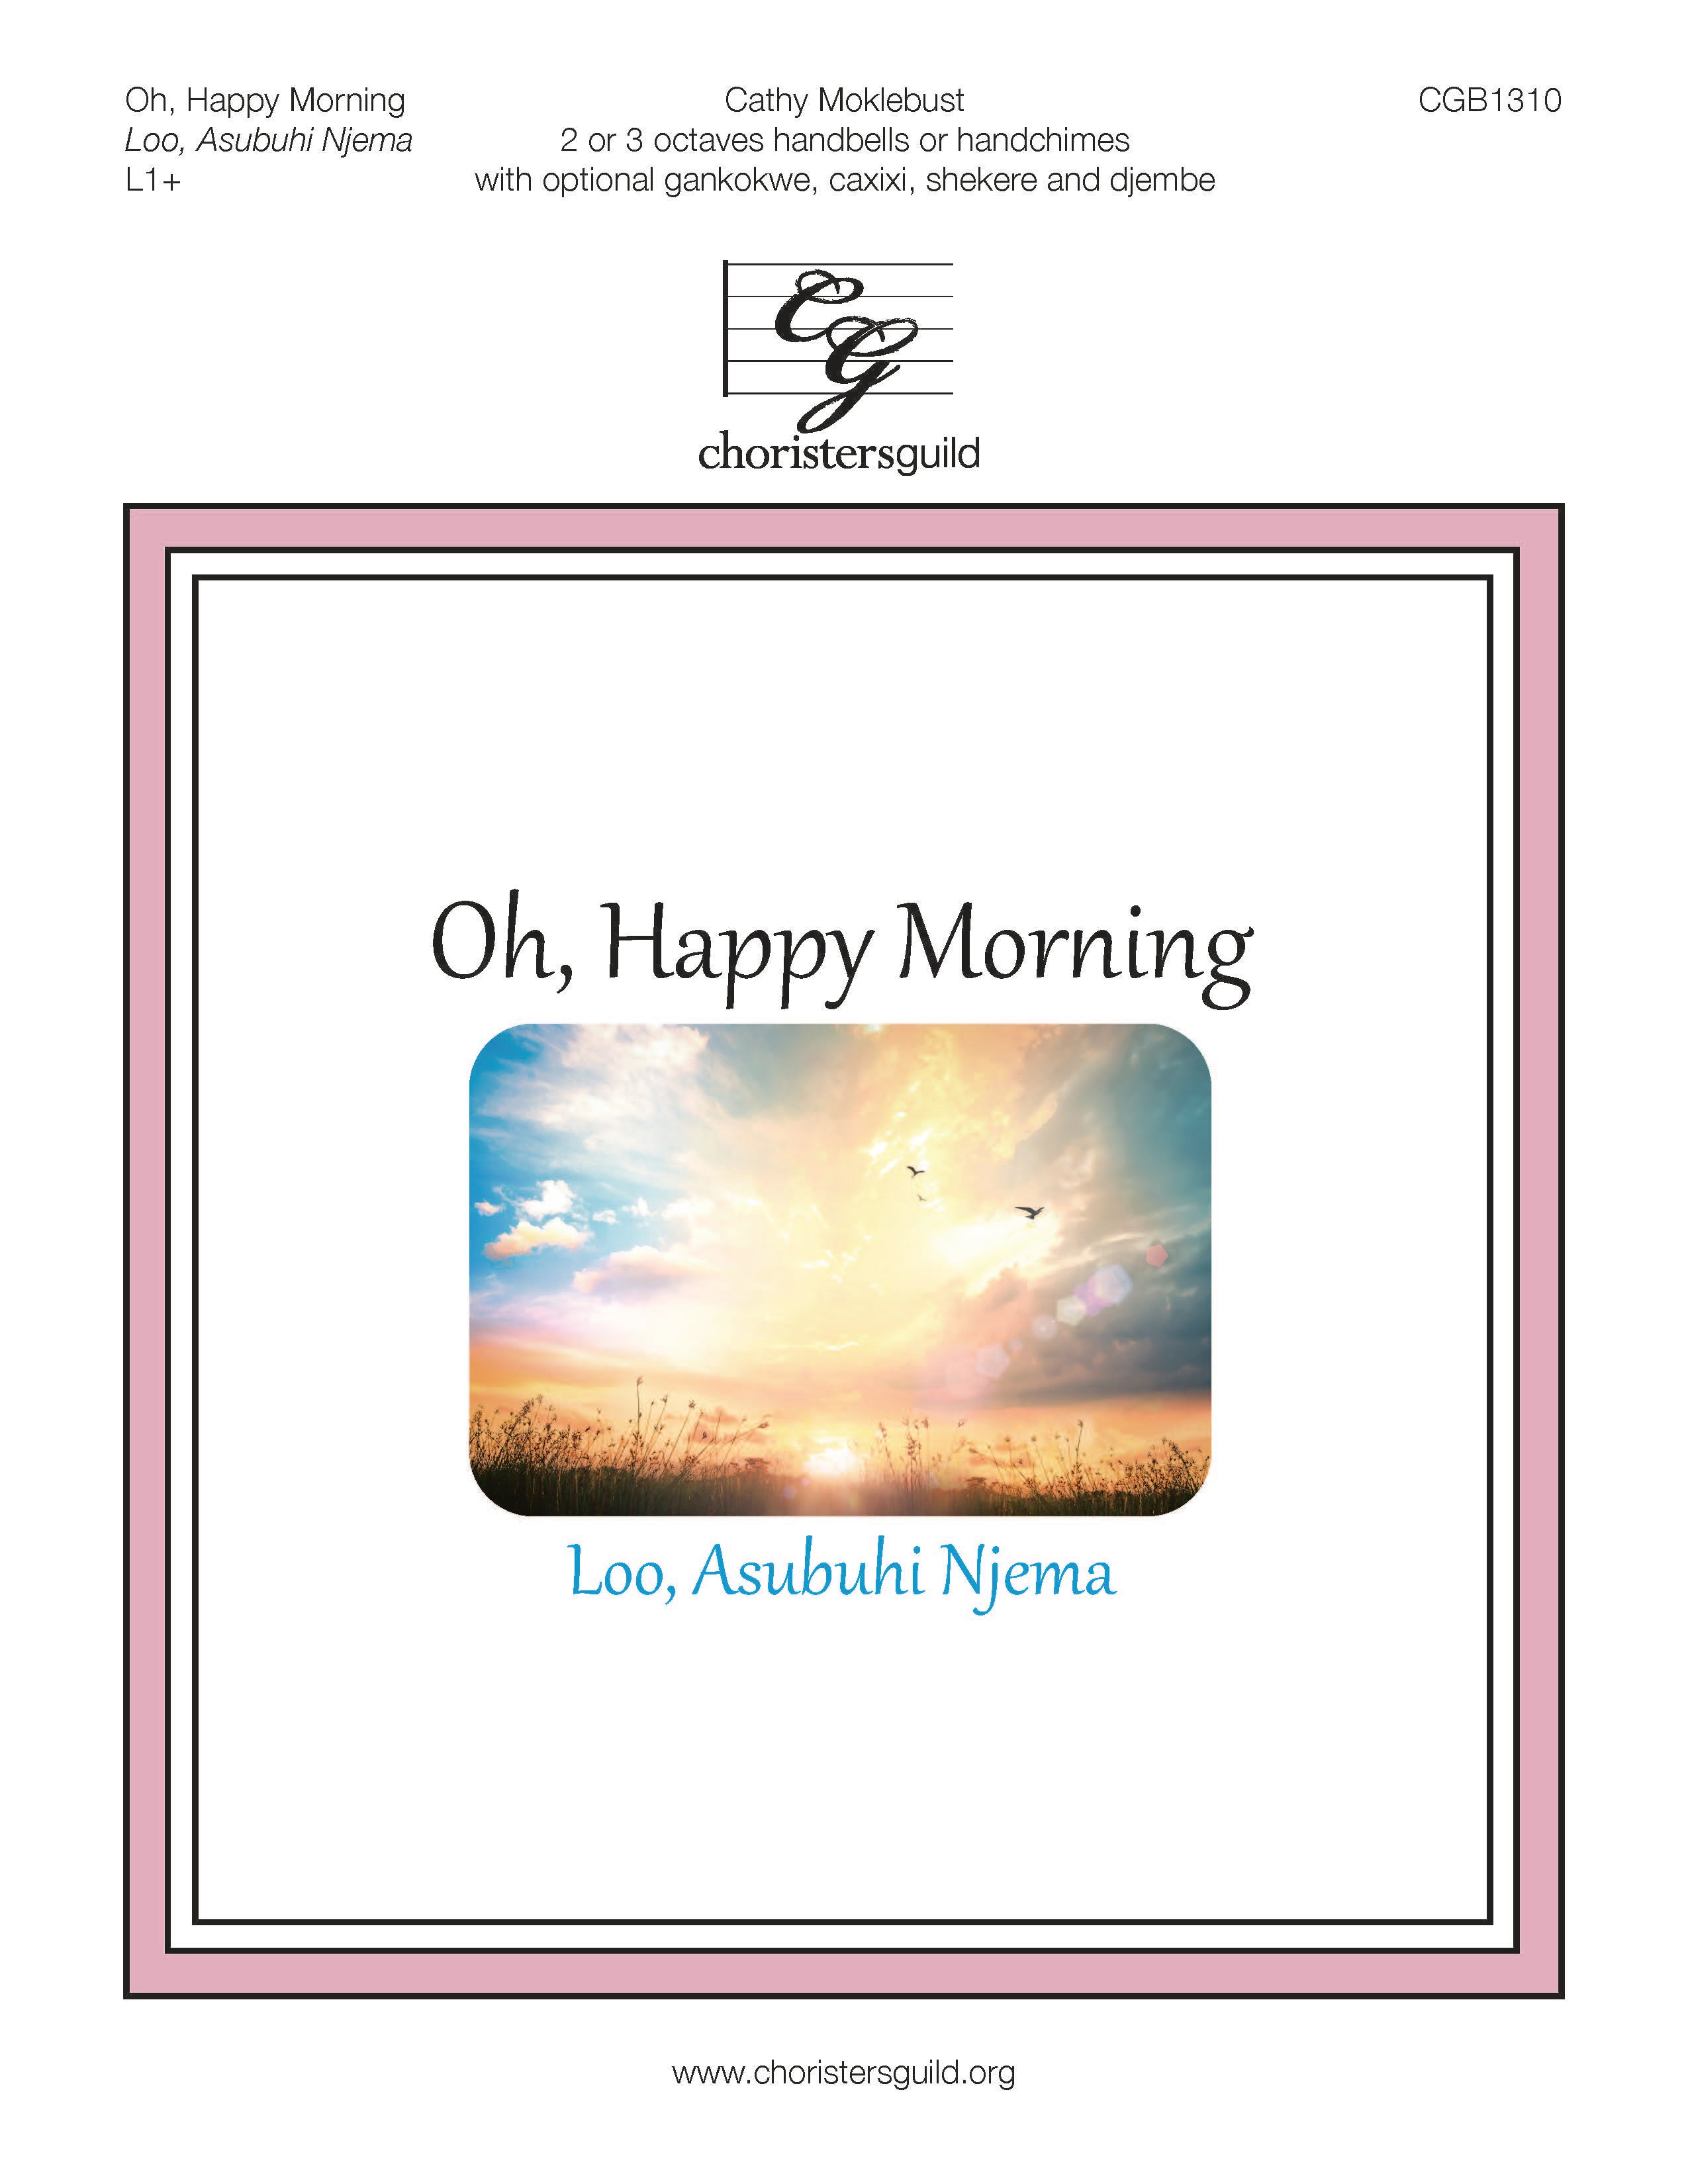 Oh, Happy Morning handbell sheet music cover